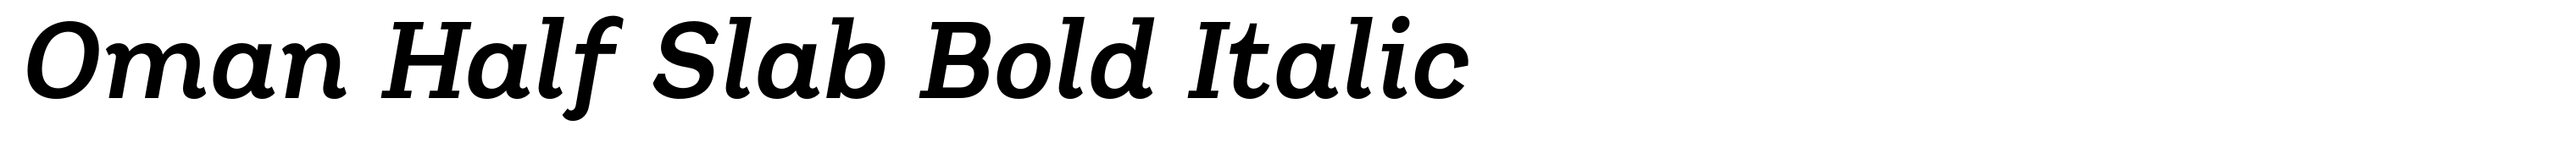 Oman Half Slab Bold Italic